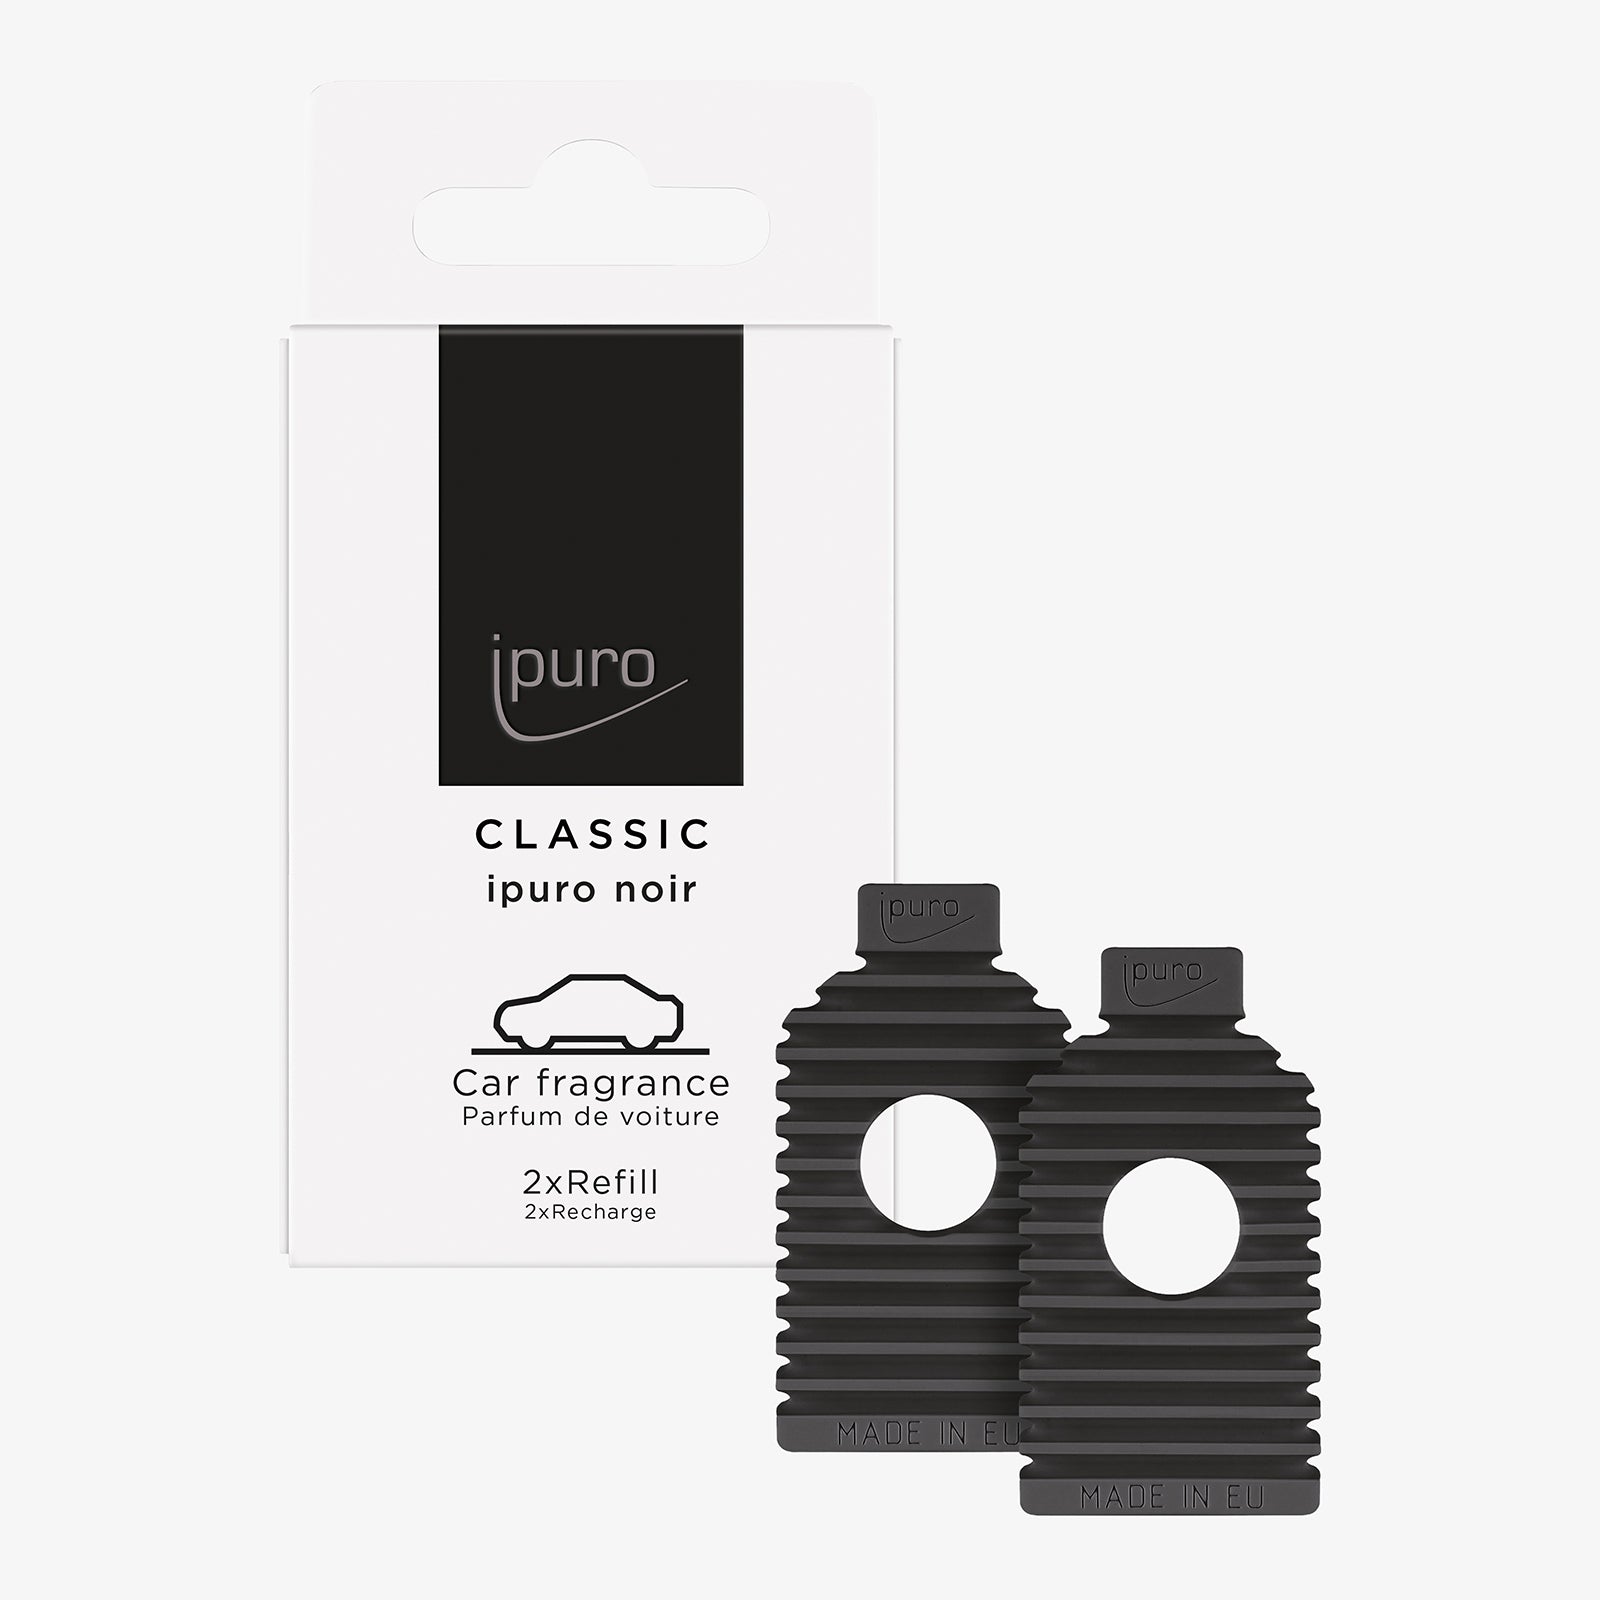 CLASSIC ipuro noir Raumduft – IPURO